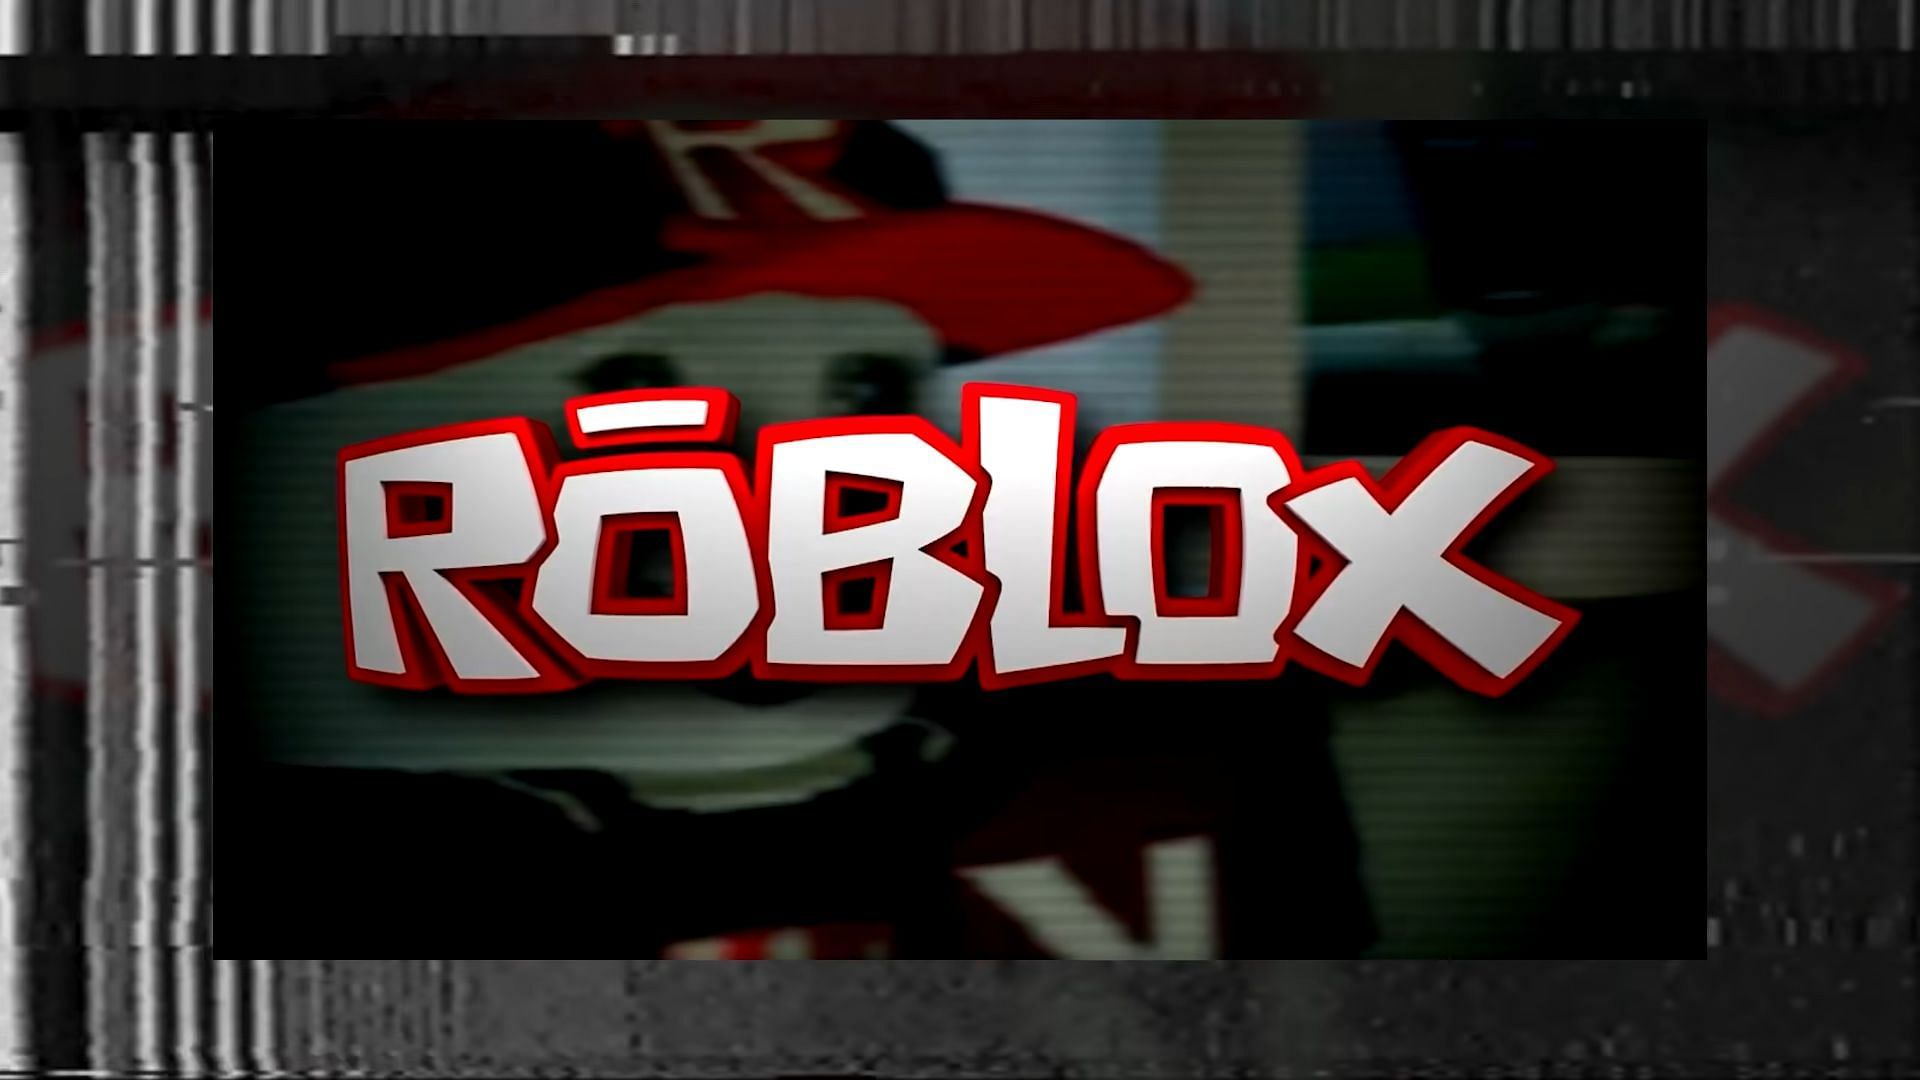 Camiseta ROBLOX logo